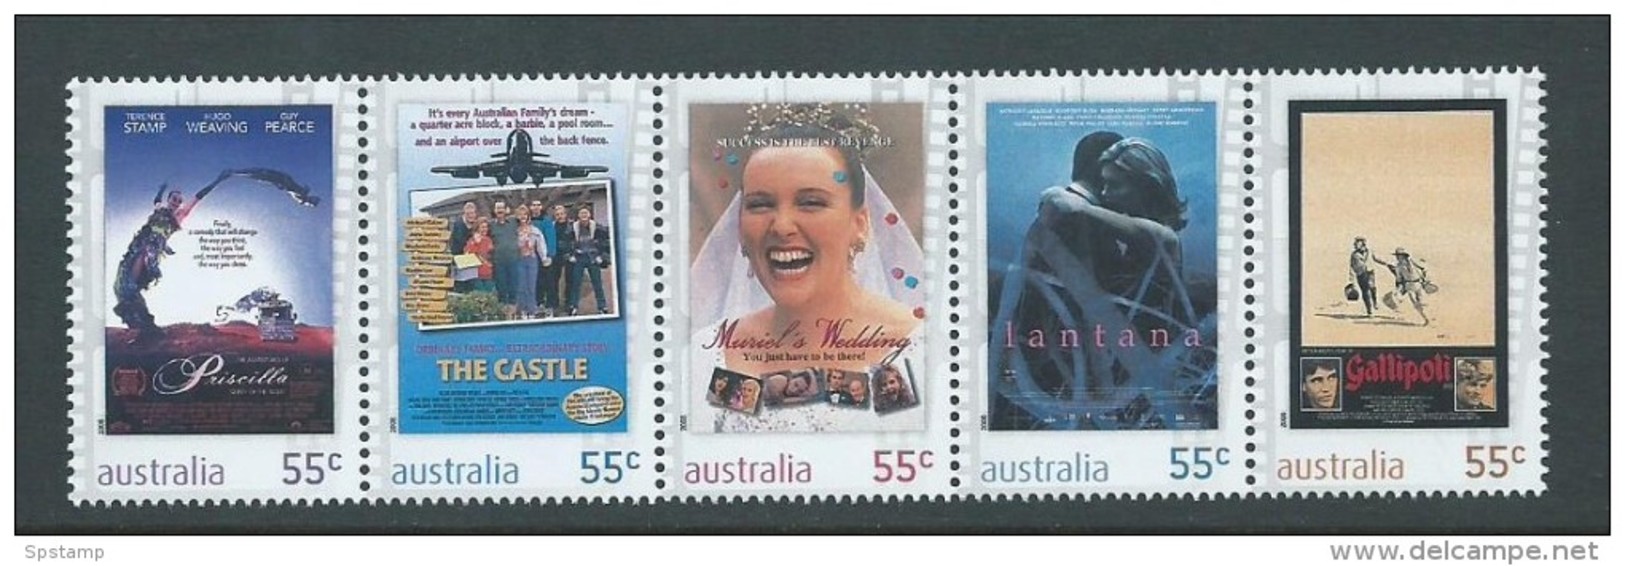 Australia 2008 Films Of Australia Strip Of 5 MNH - Mint Stamps